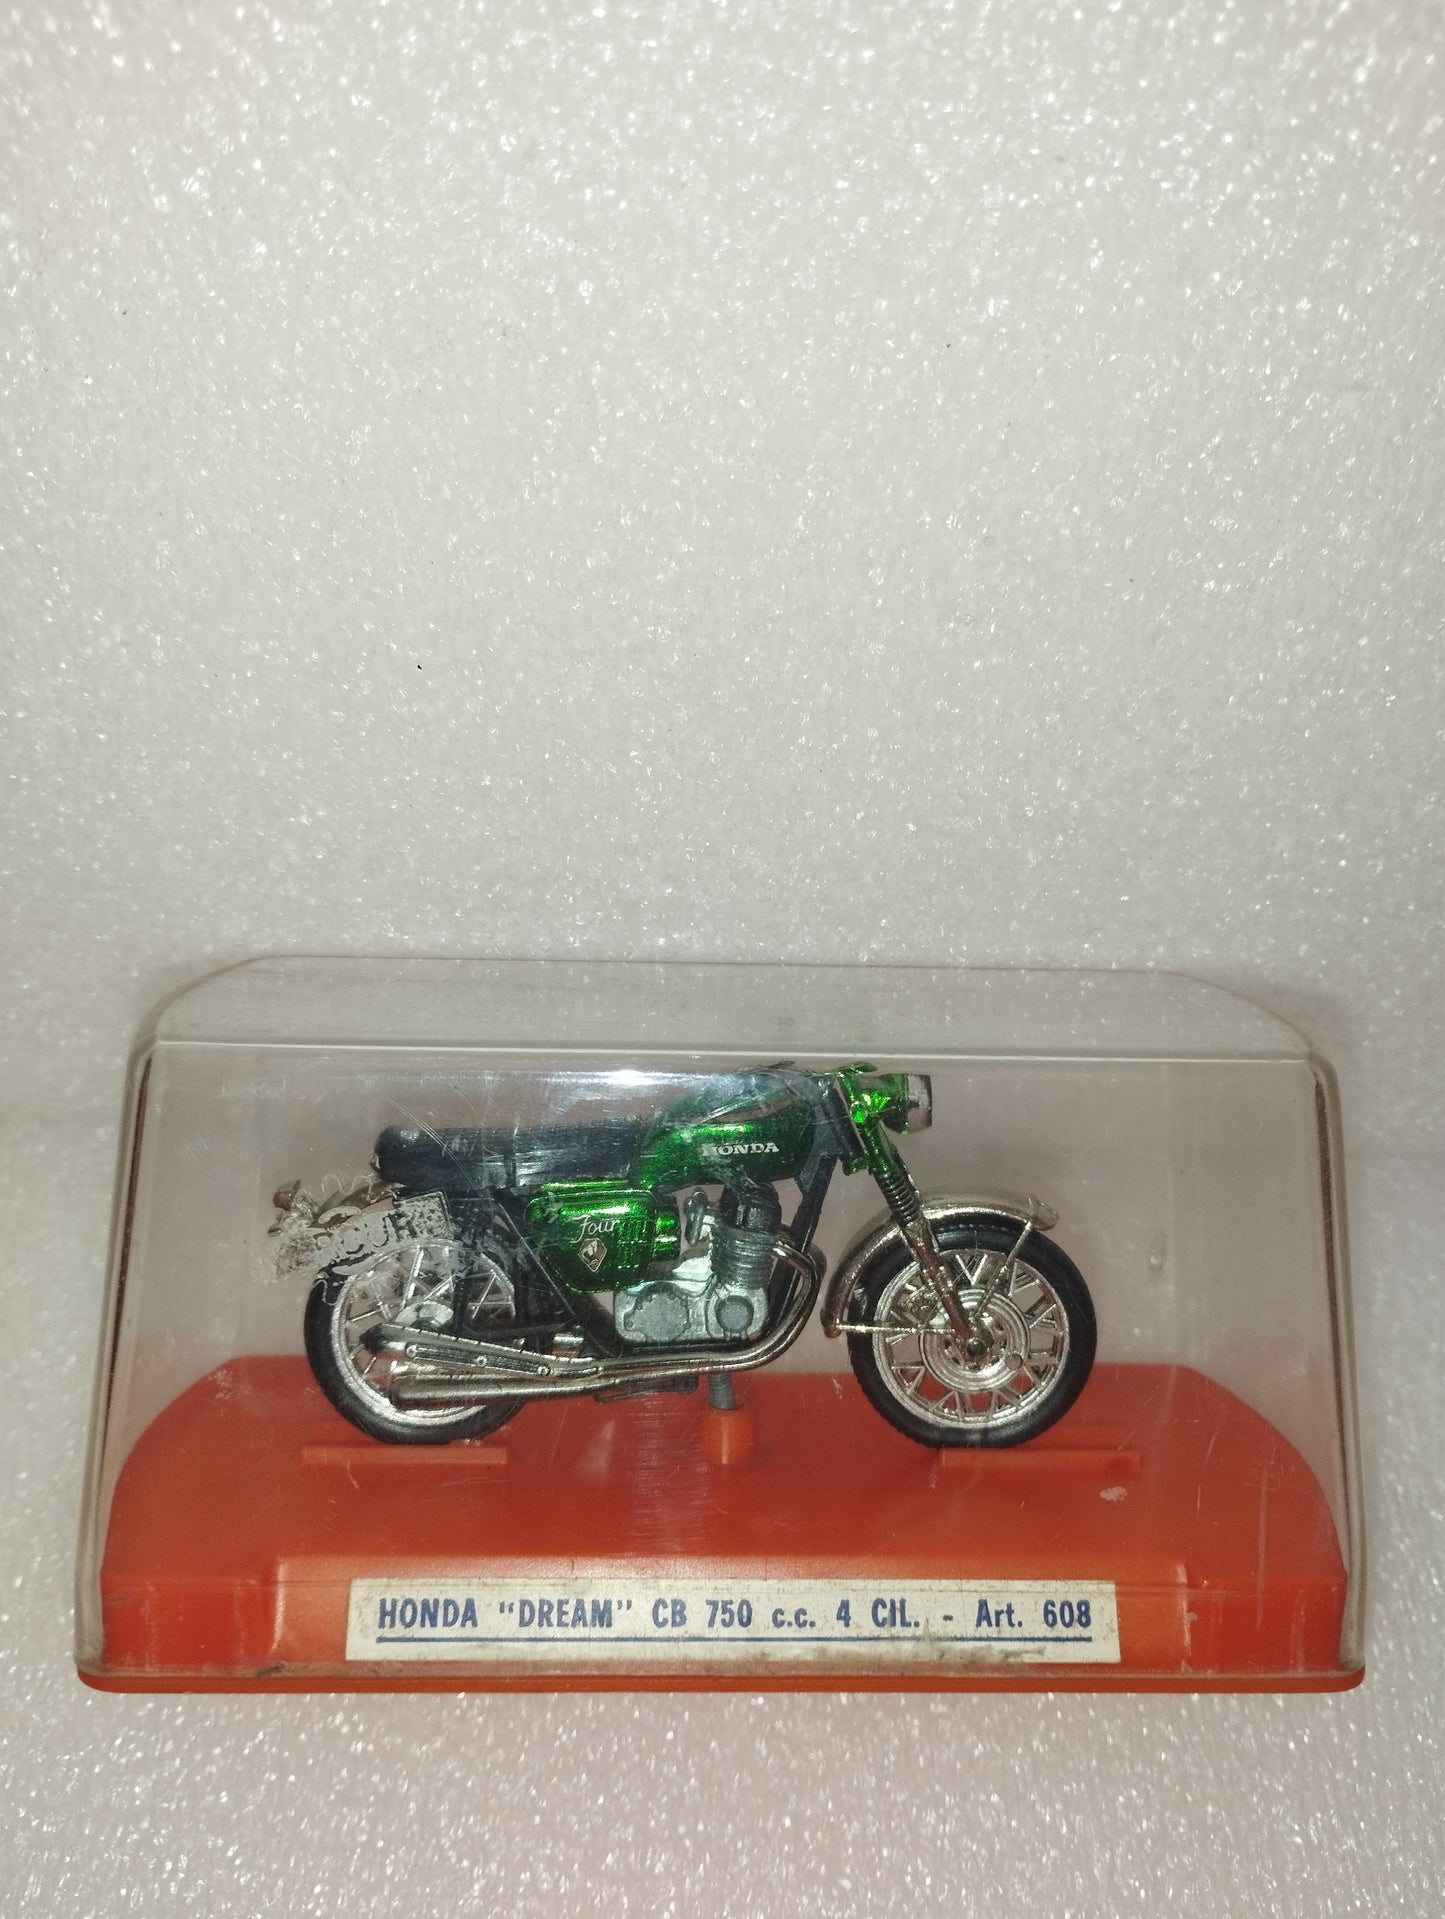 Mercury Model Honda Dream CB 750 cc 4 Cyl

 1:24 scale